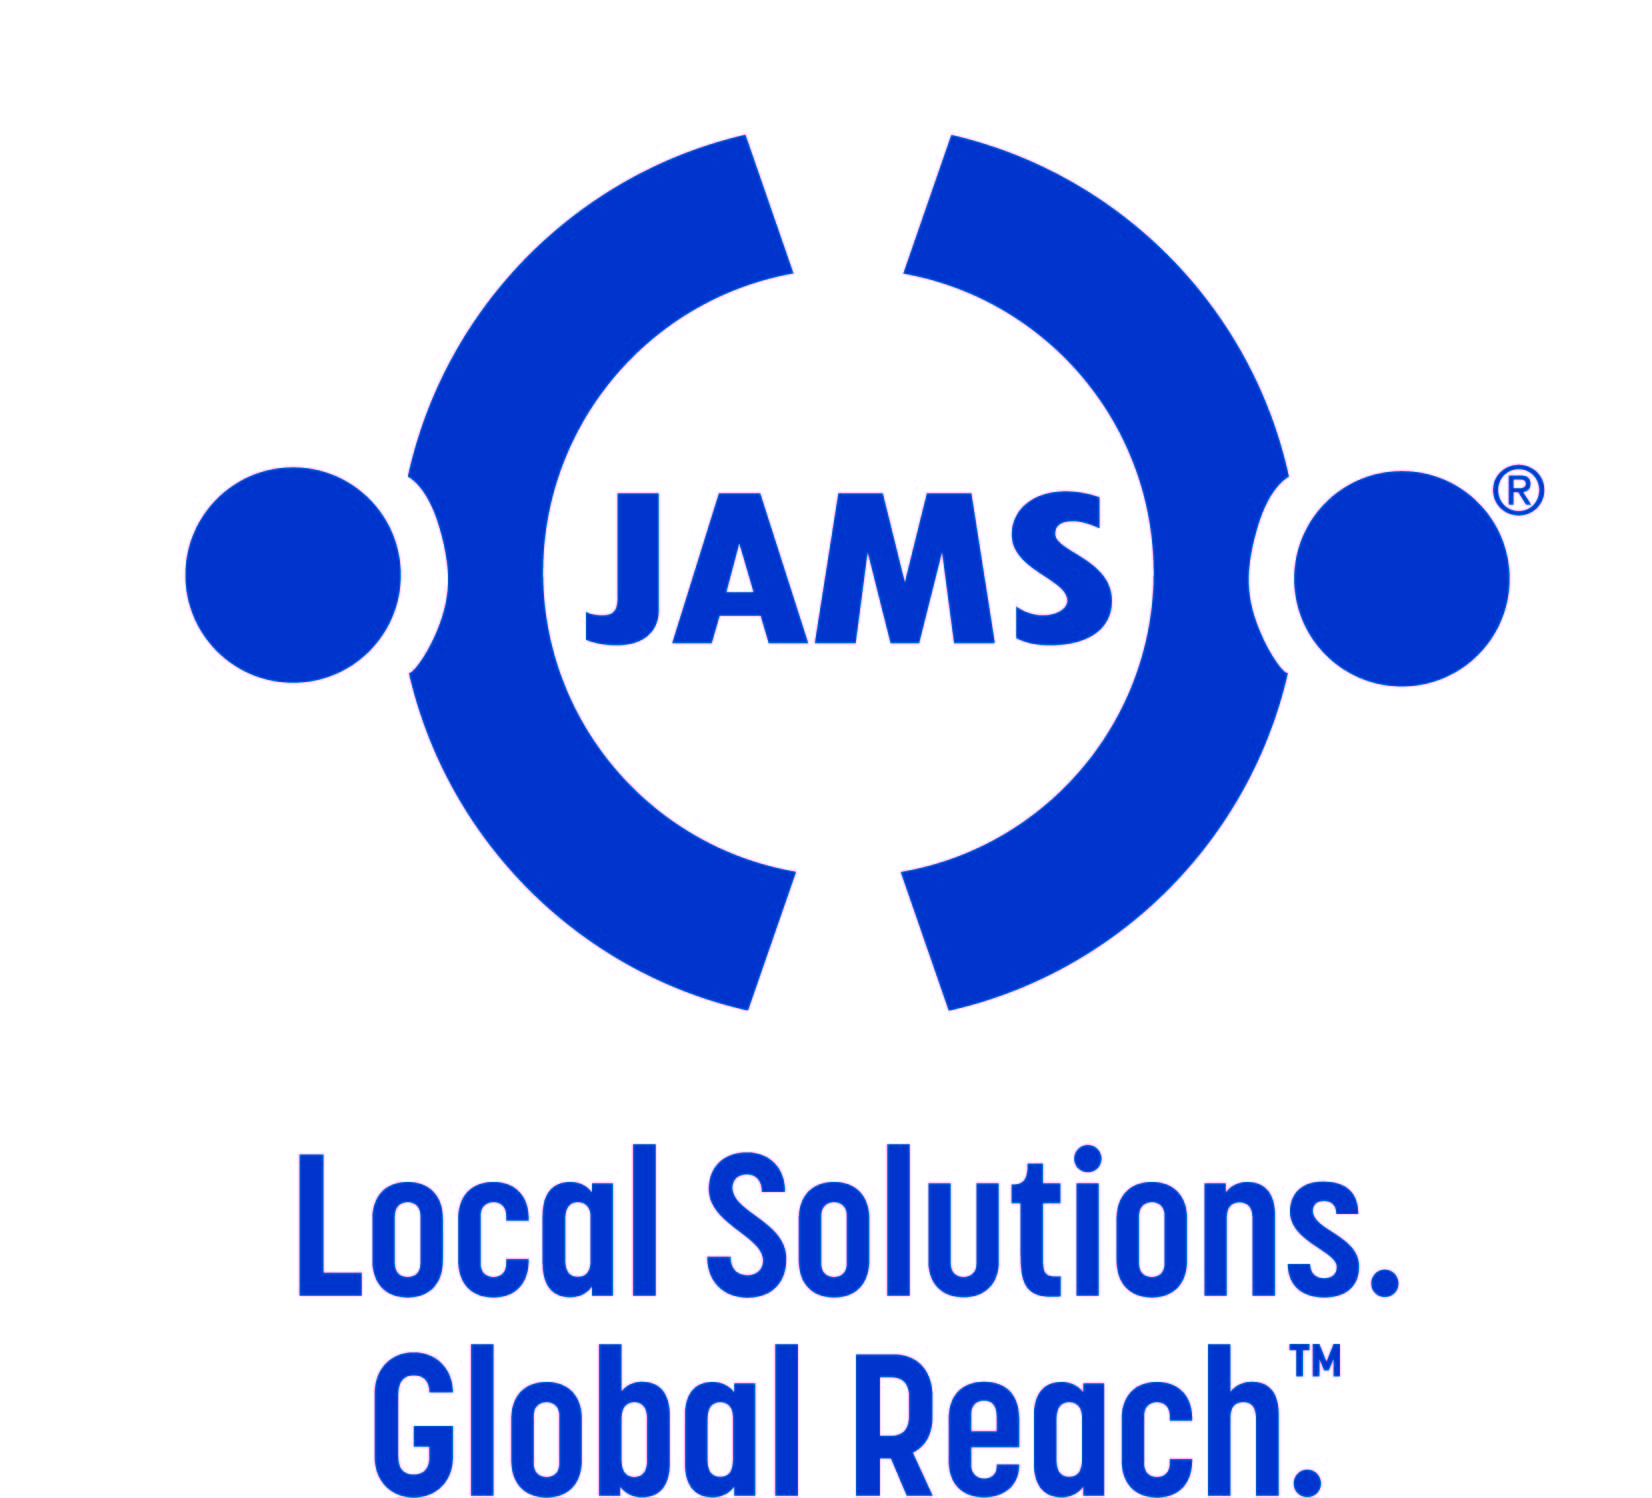 jams-logo-with-tagline-square.jpg